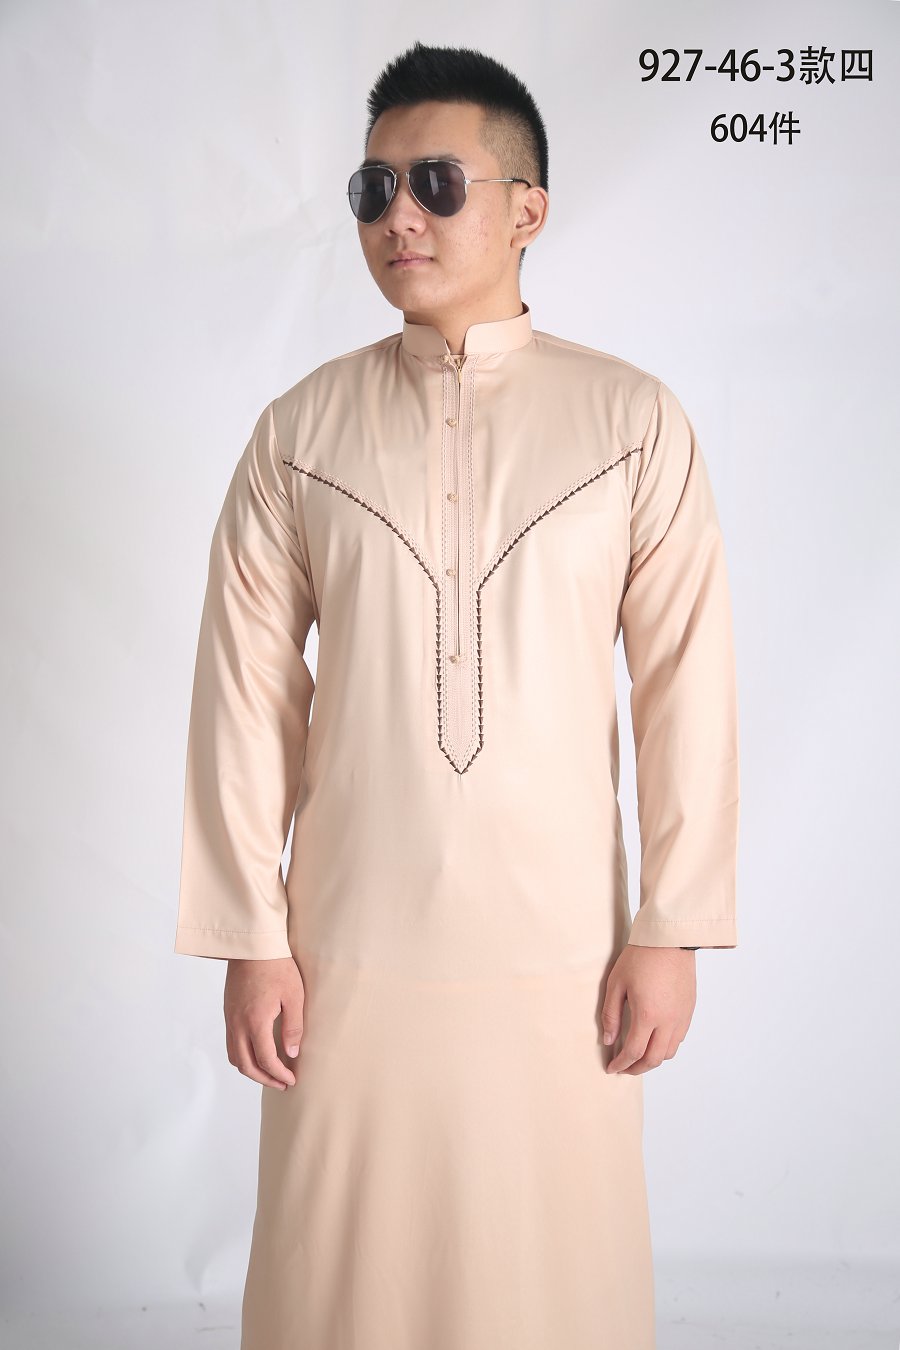 Oman robes6